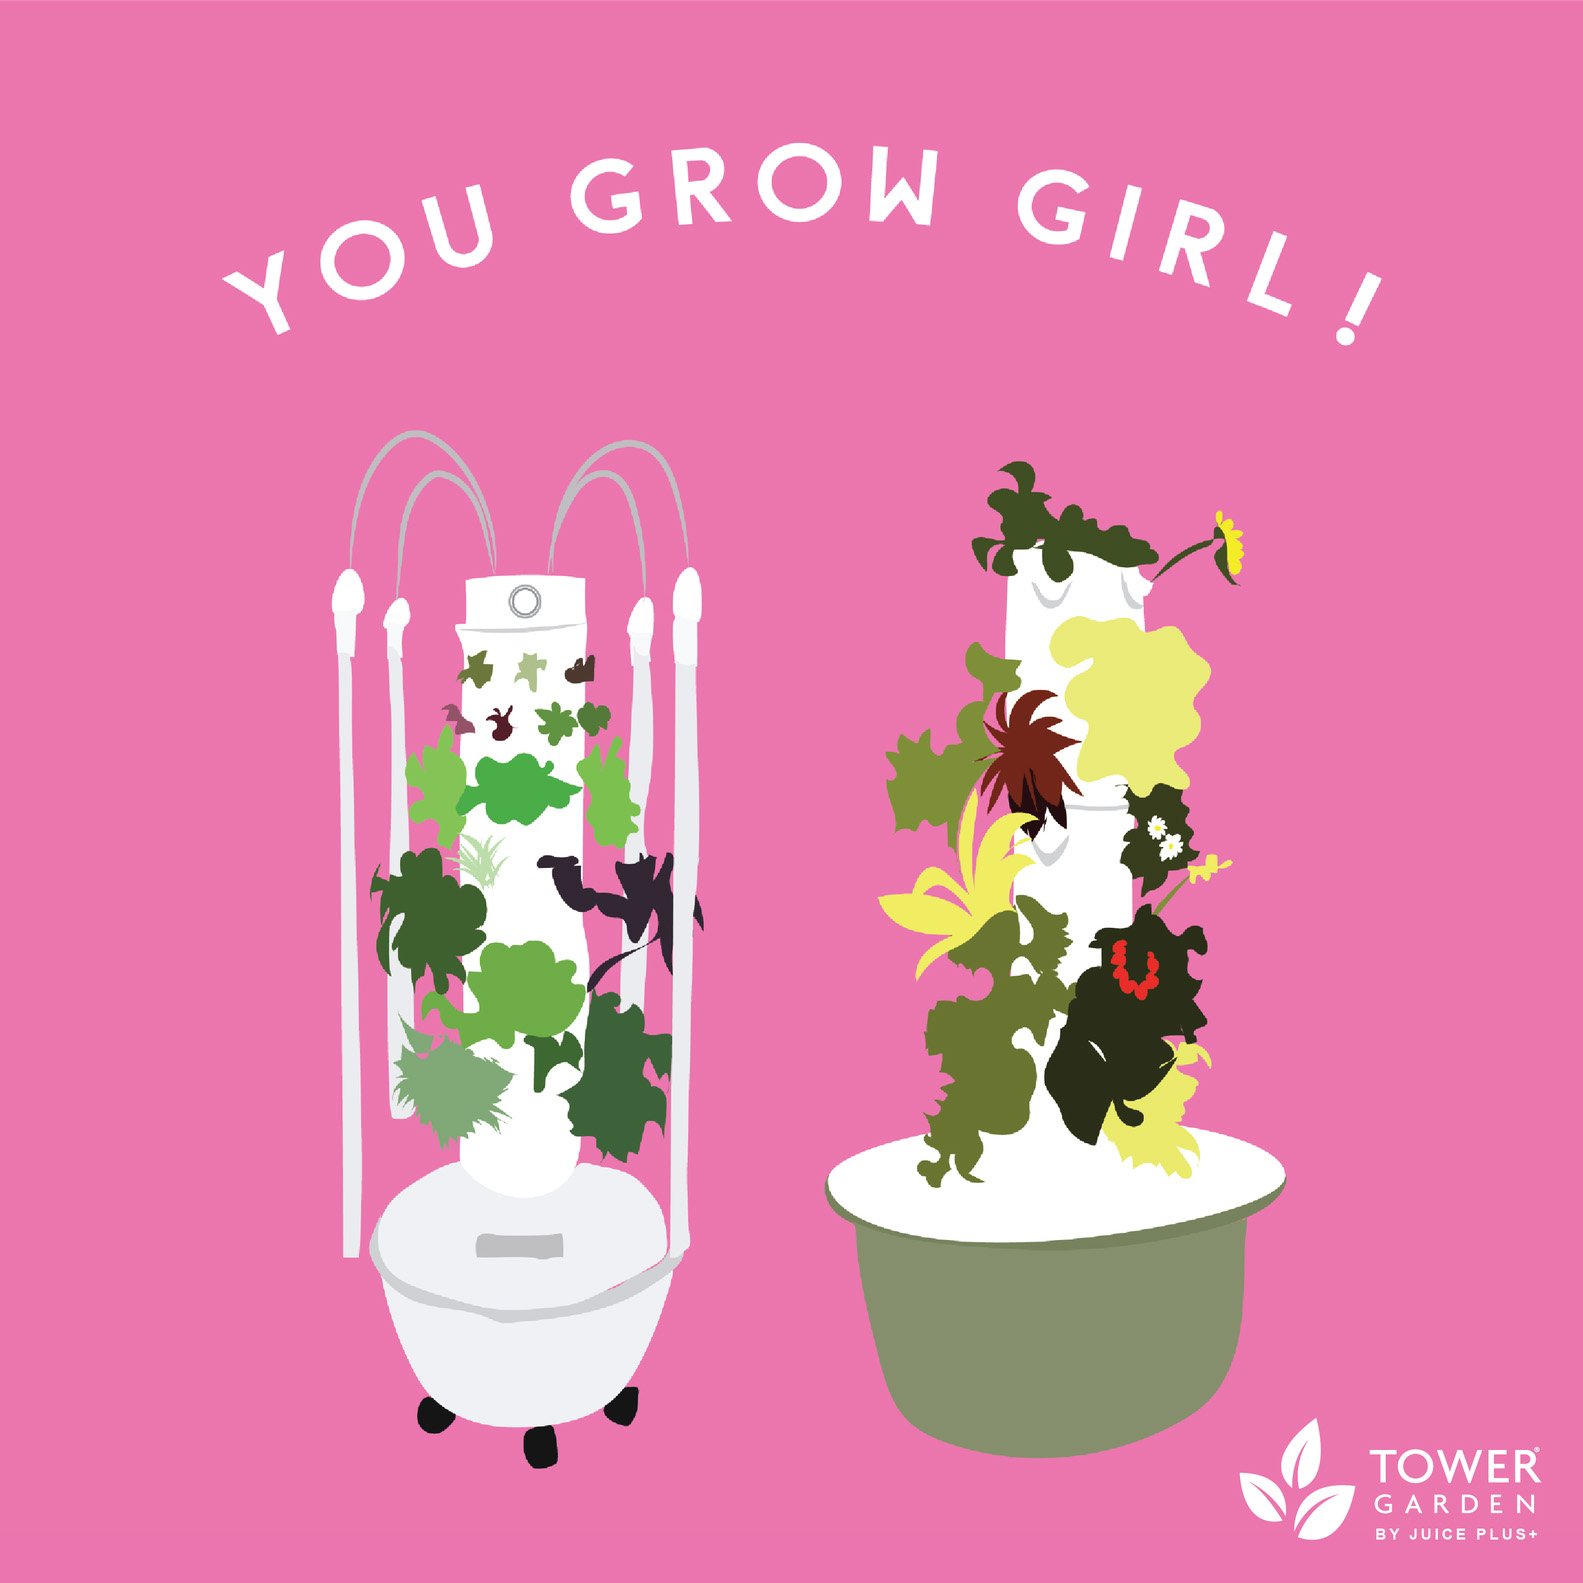 Tower_Garden_Growing_Gardens_For_Kids_Homeschooling.jpg